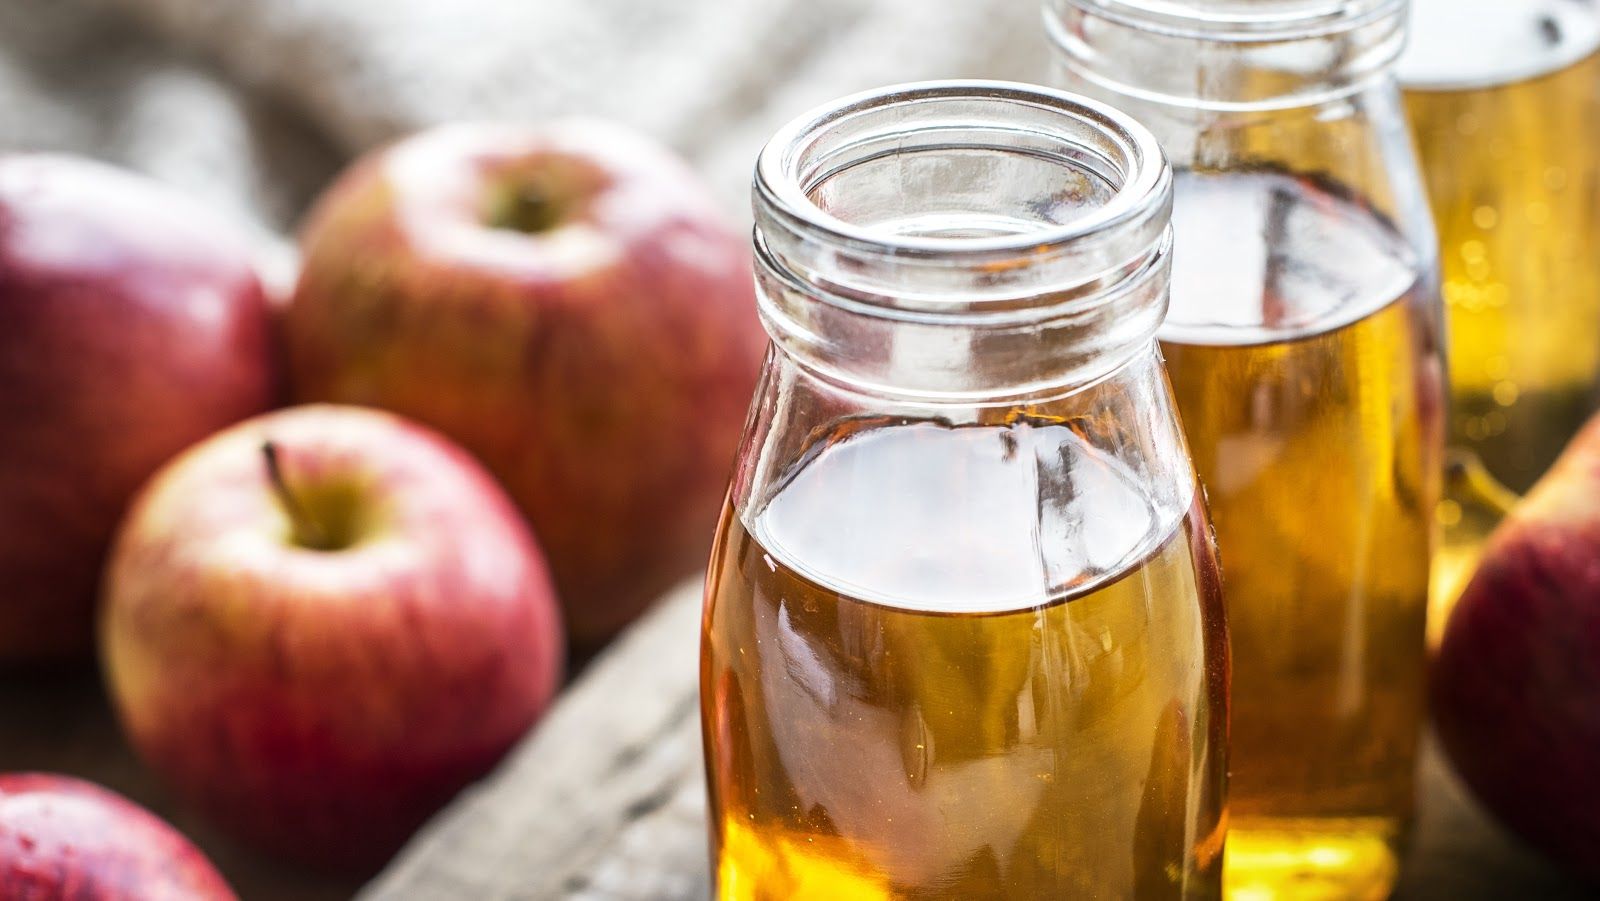 Best uses of apple cider vinegar